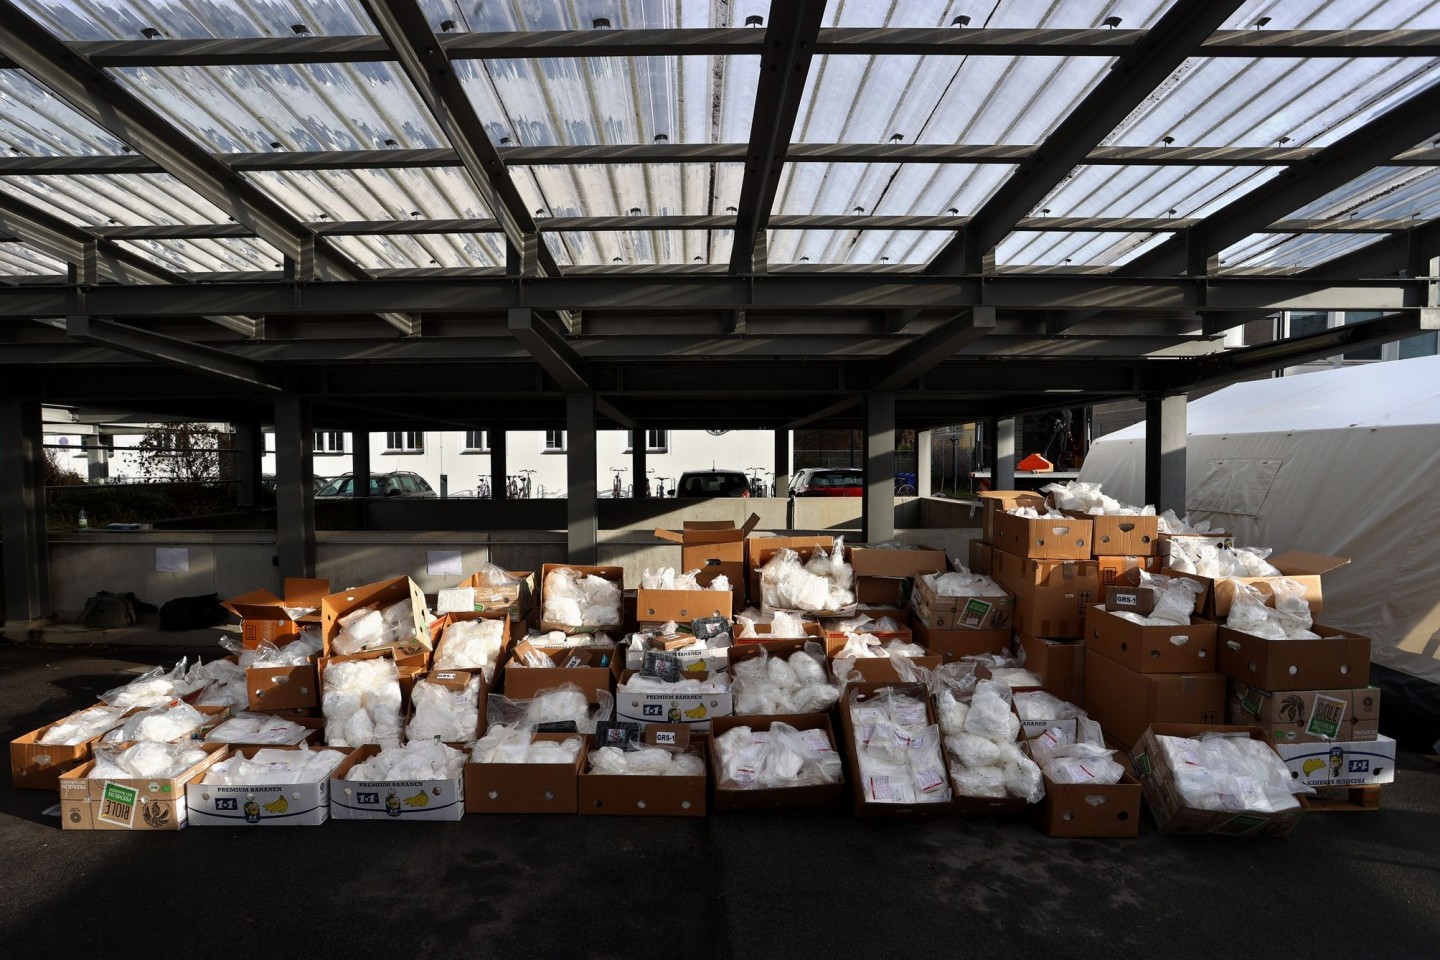 Rund 1,5 Tonnen Kokain liegen zum Abtransport bereit.